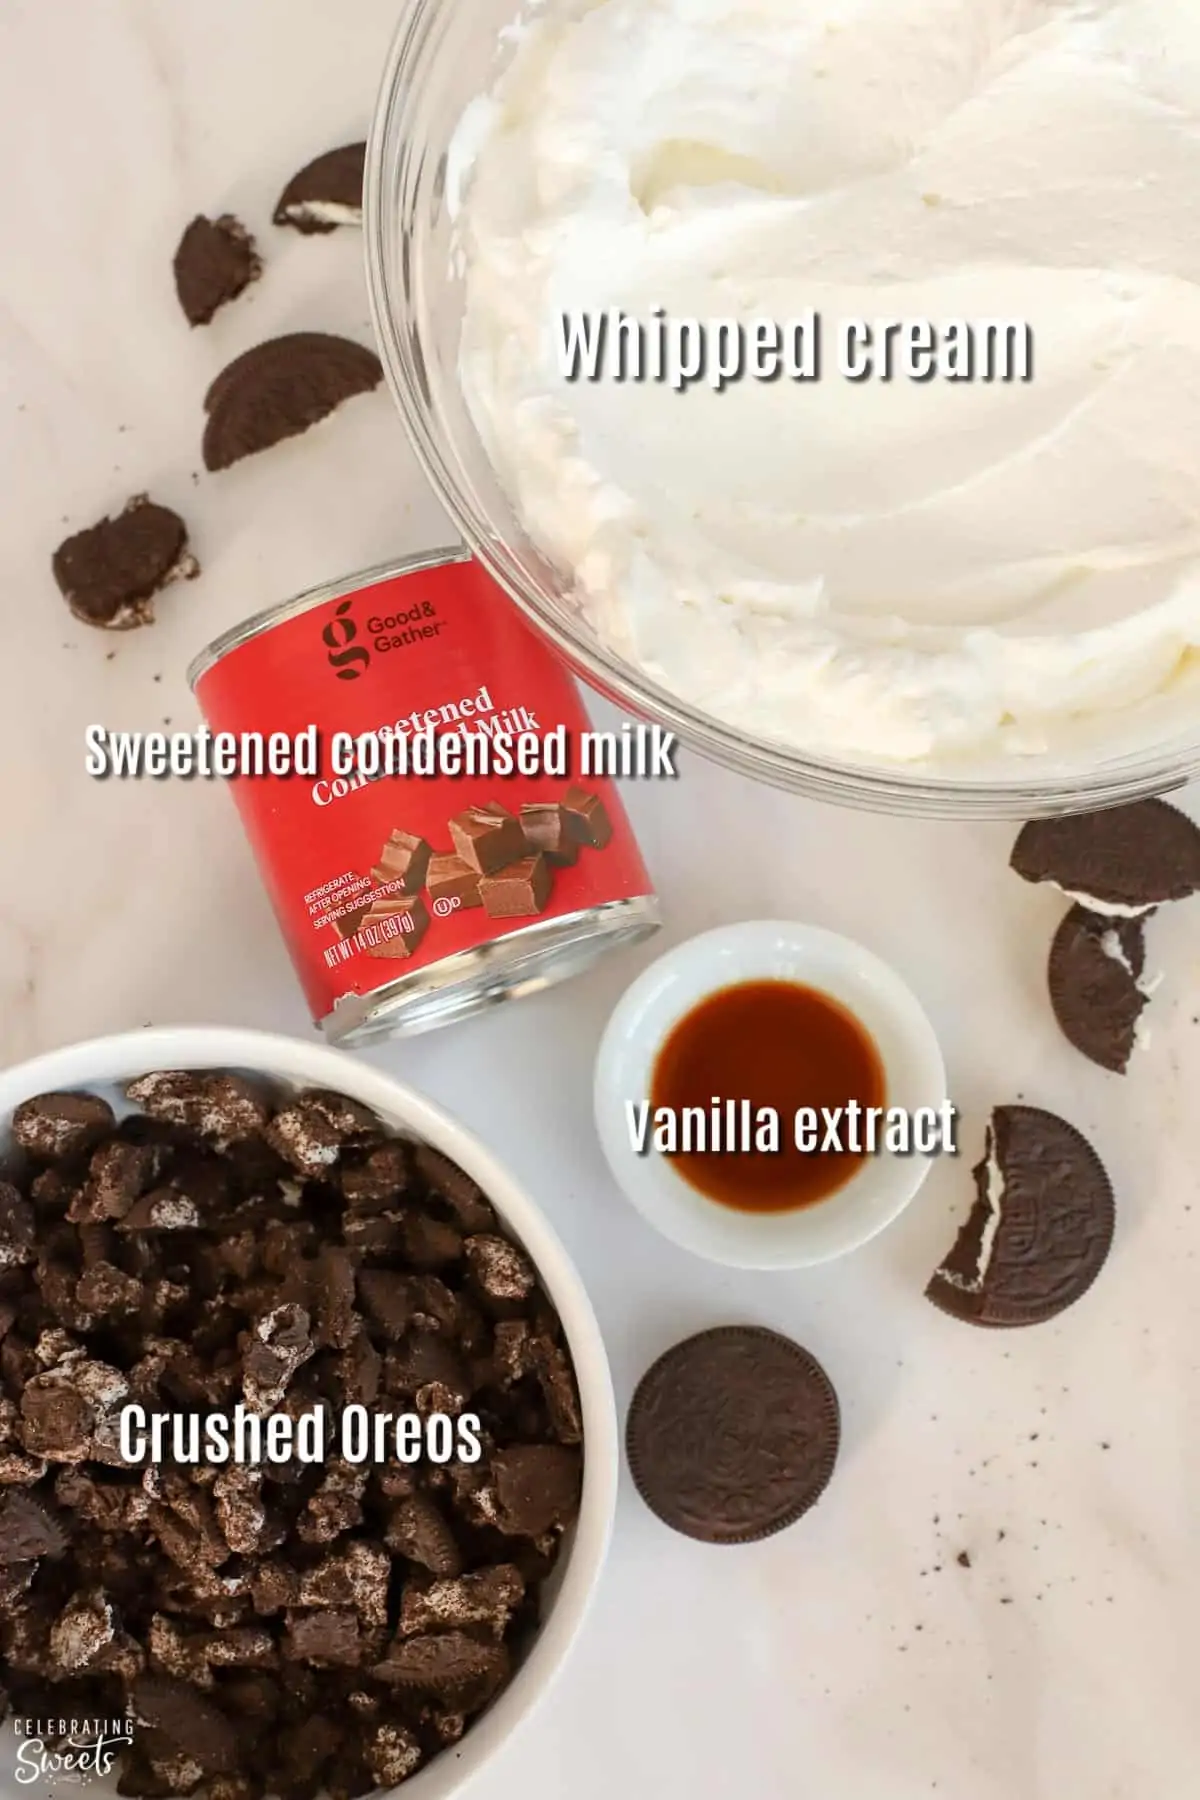 Ingredients for cookies and cream ice cream: whipped cream, sweetened condensed milk, oreos.